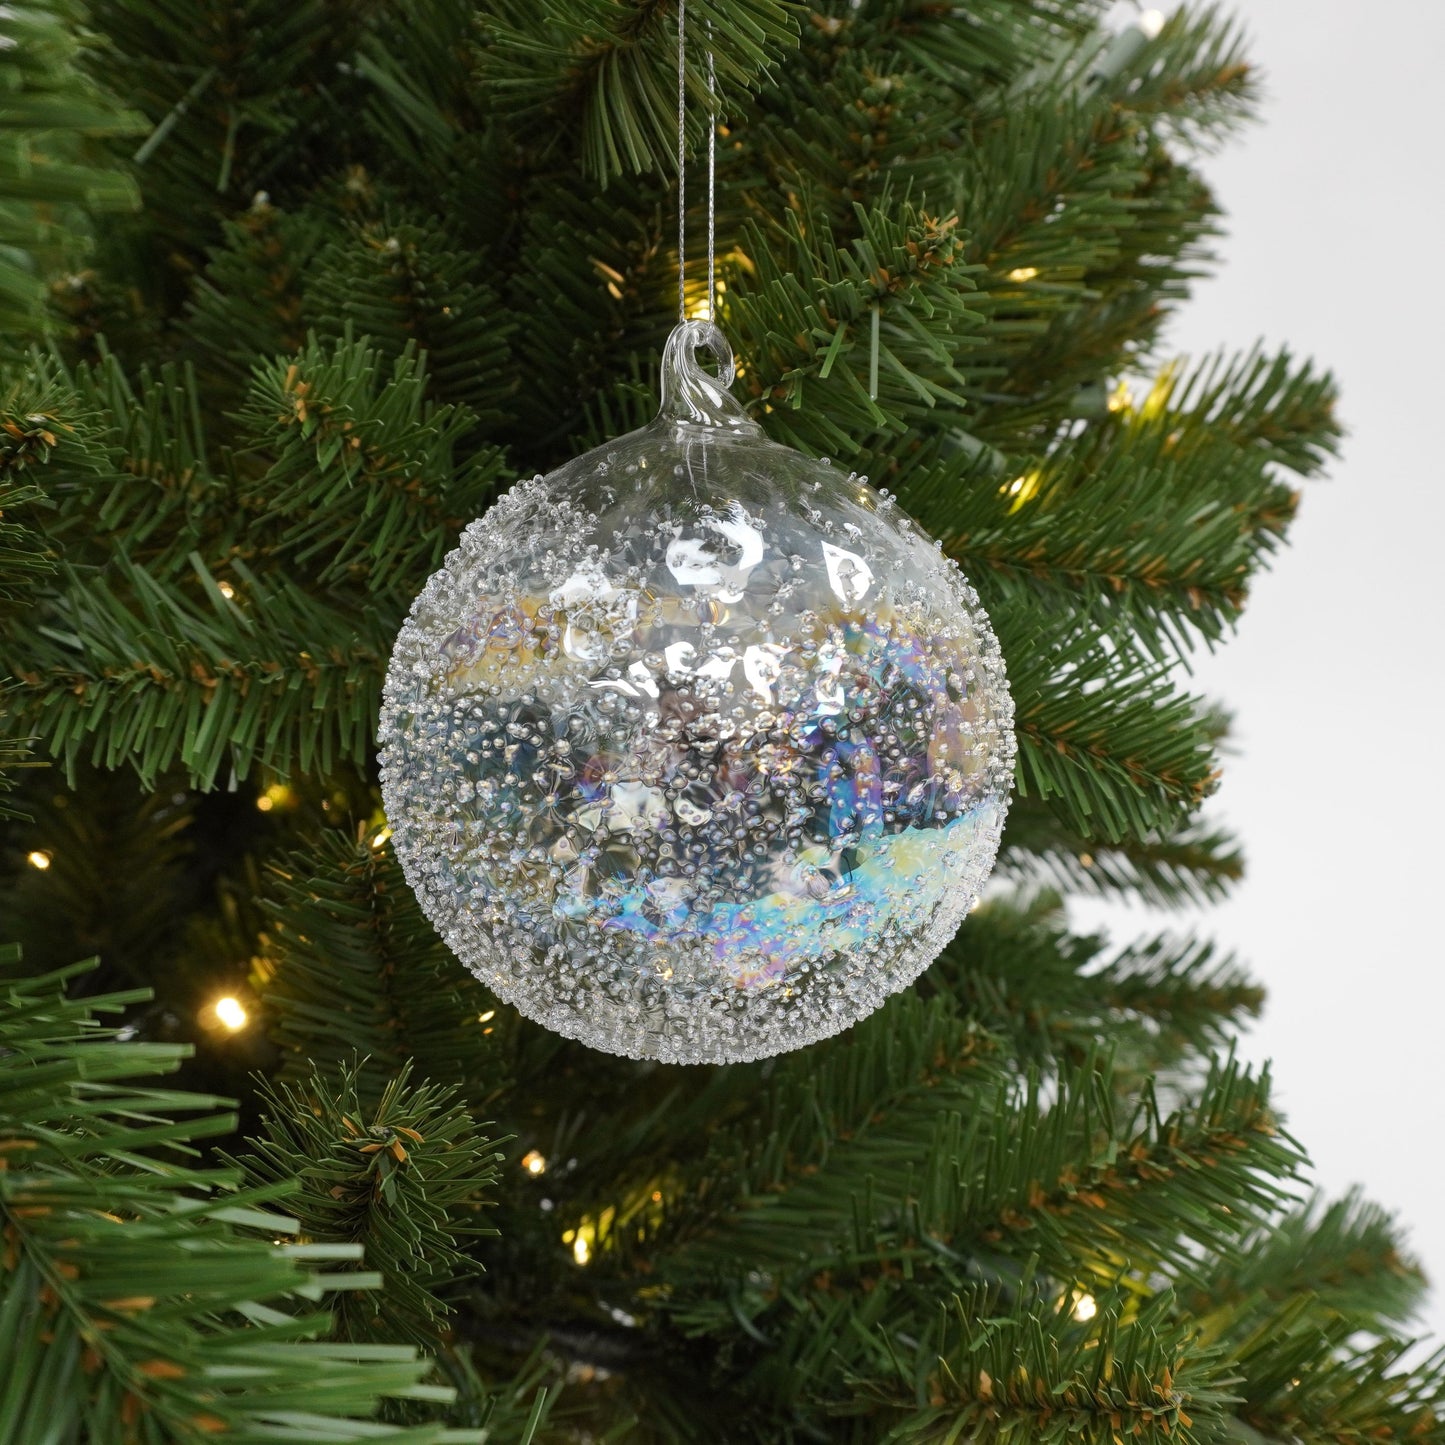 5" Glistening Glass Ball Ornaments